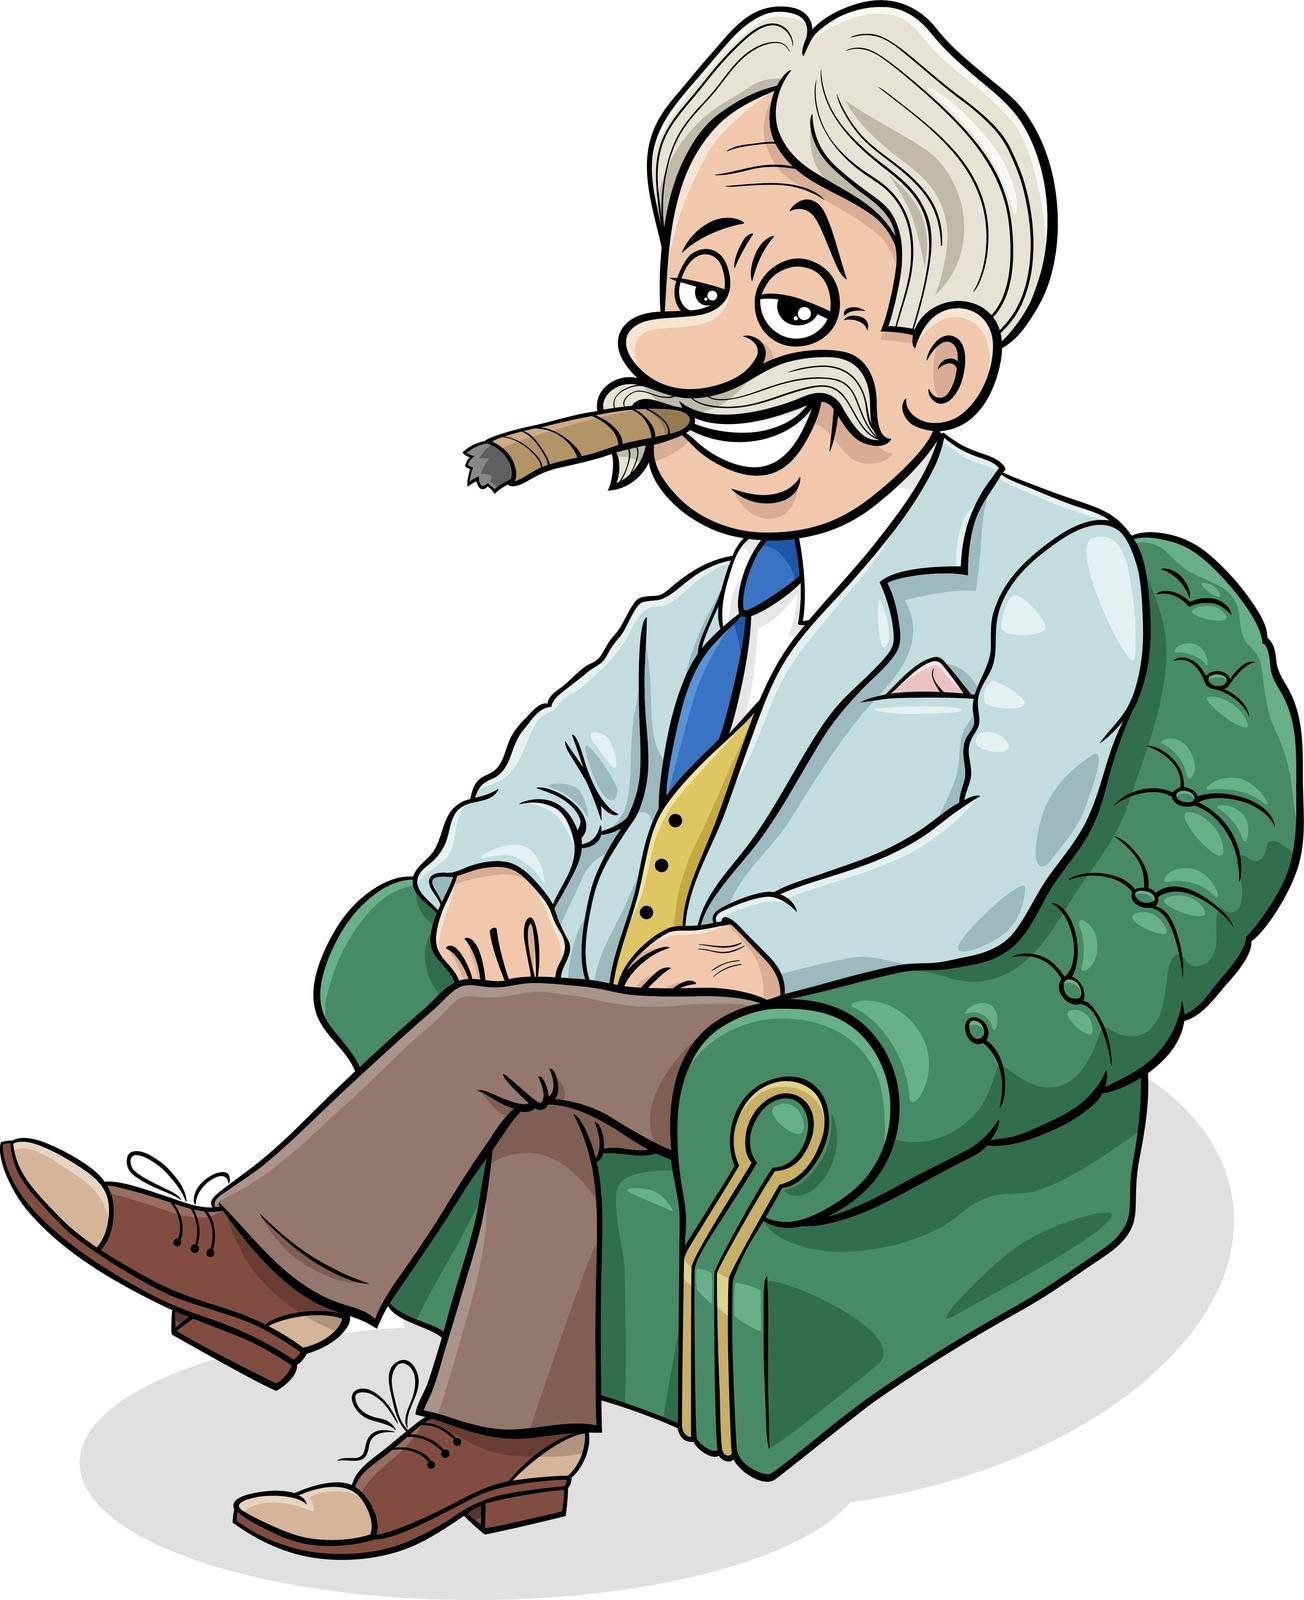 boss or businessman in armchair cartoon illustration by izakowski